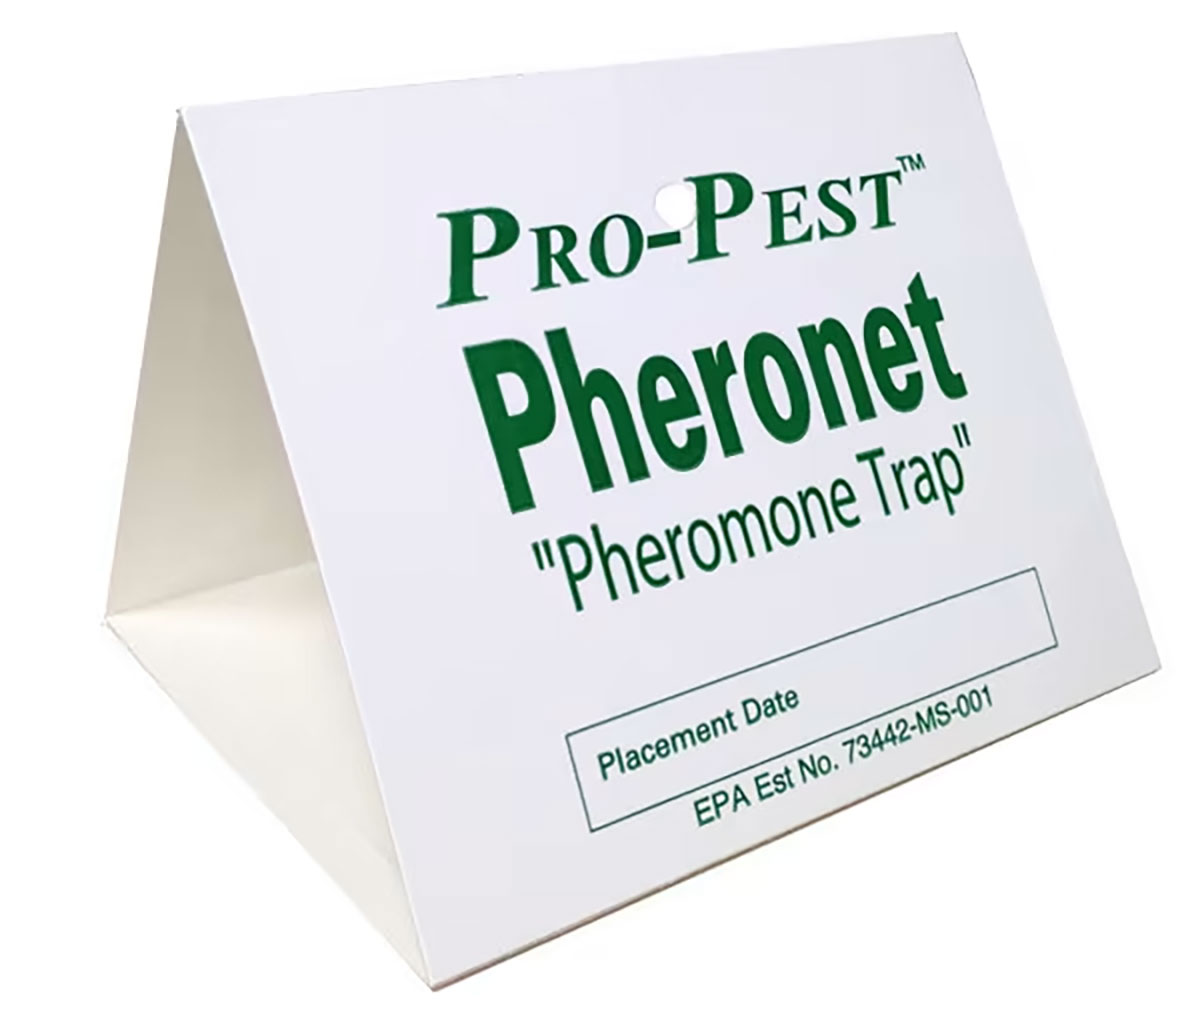 Propest Pheronet Pheromone Pantry Pest Moth Trap